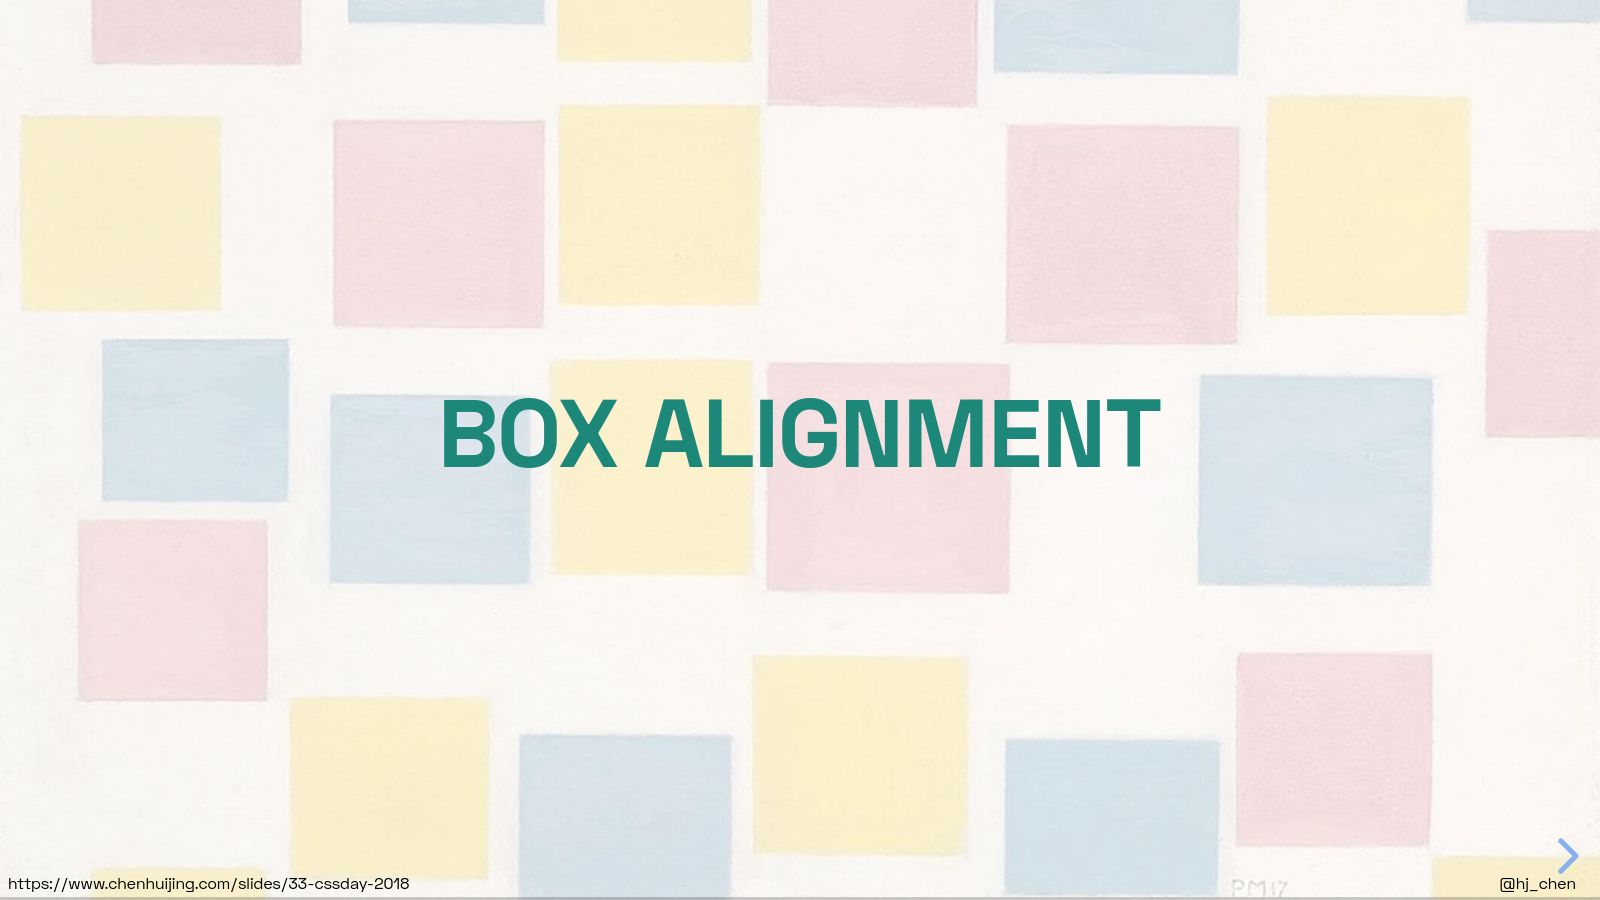 Box alignment